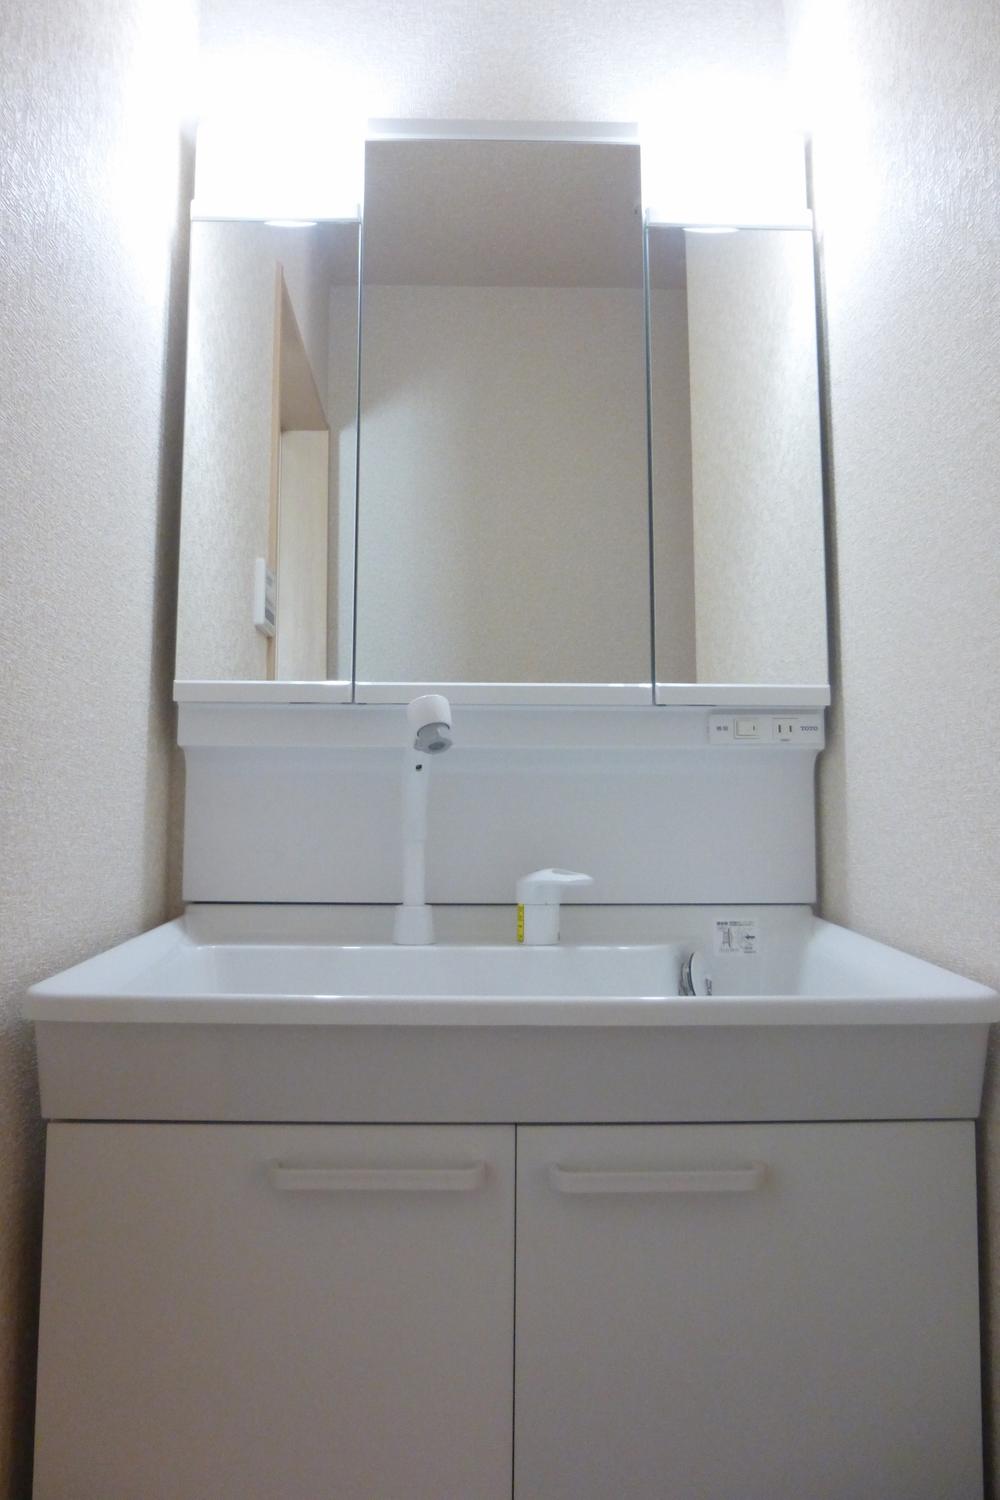 Wash basin, toilet. Vanity shower